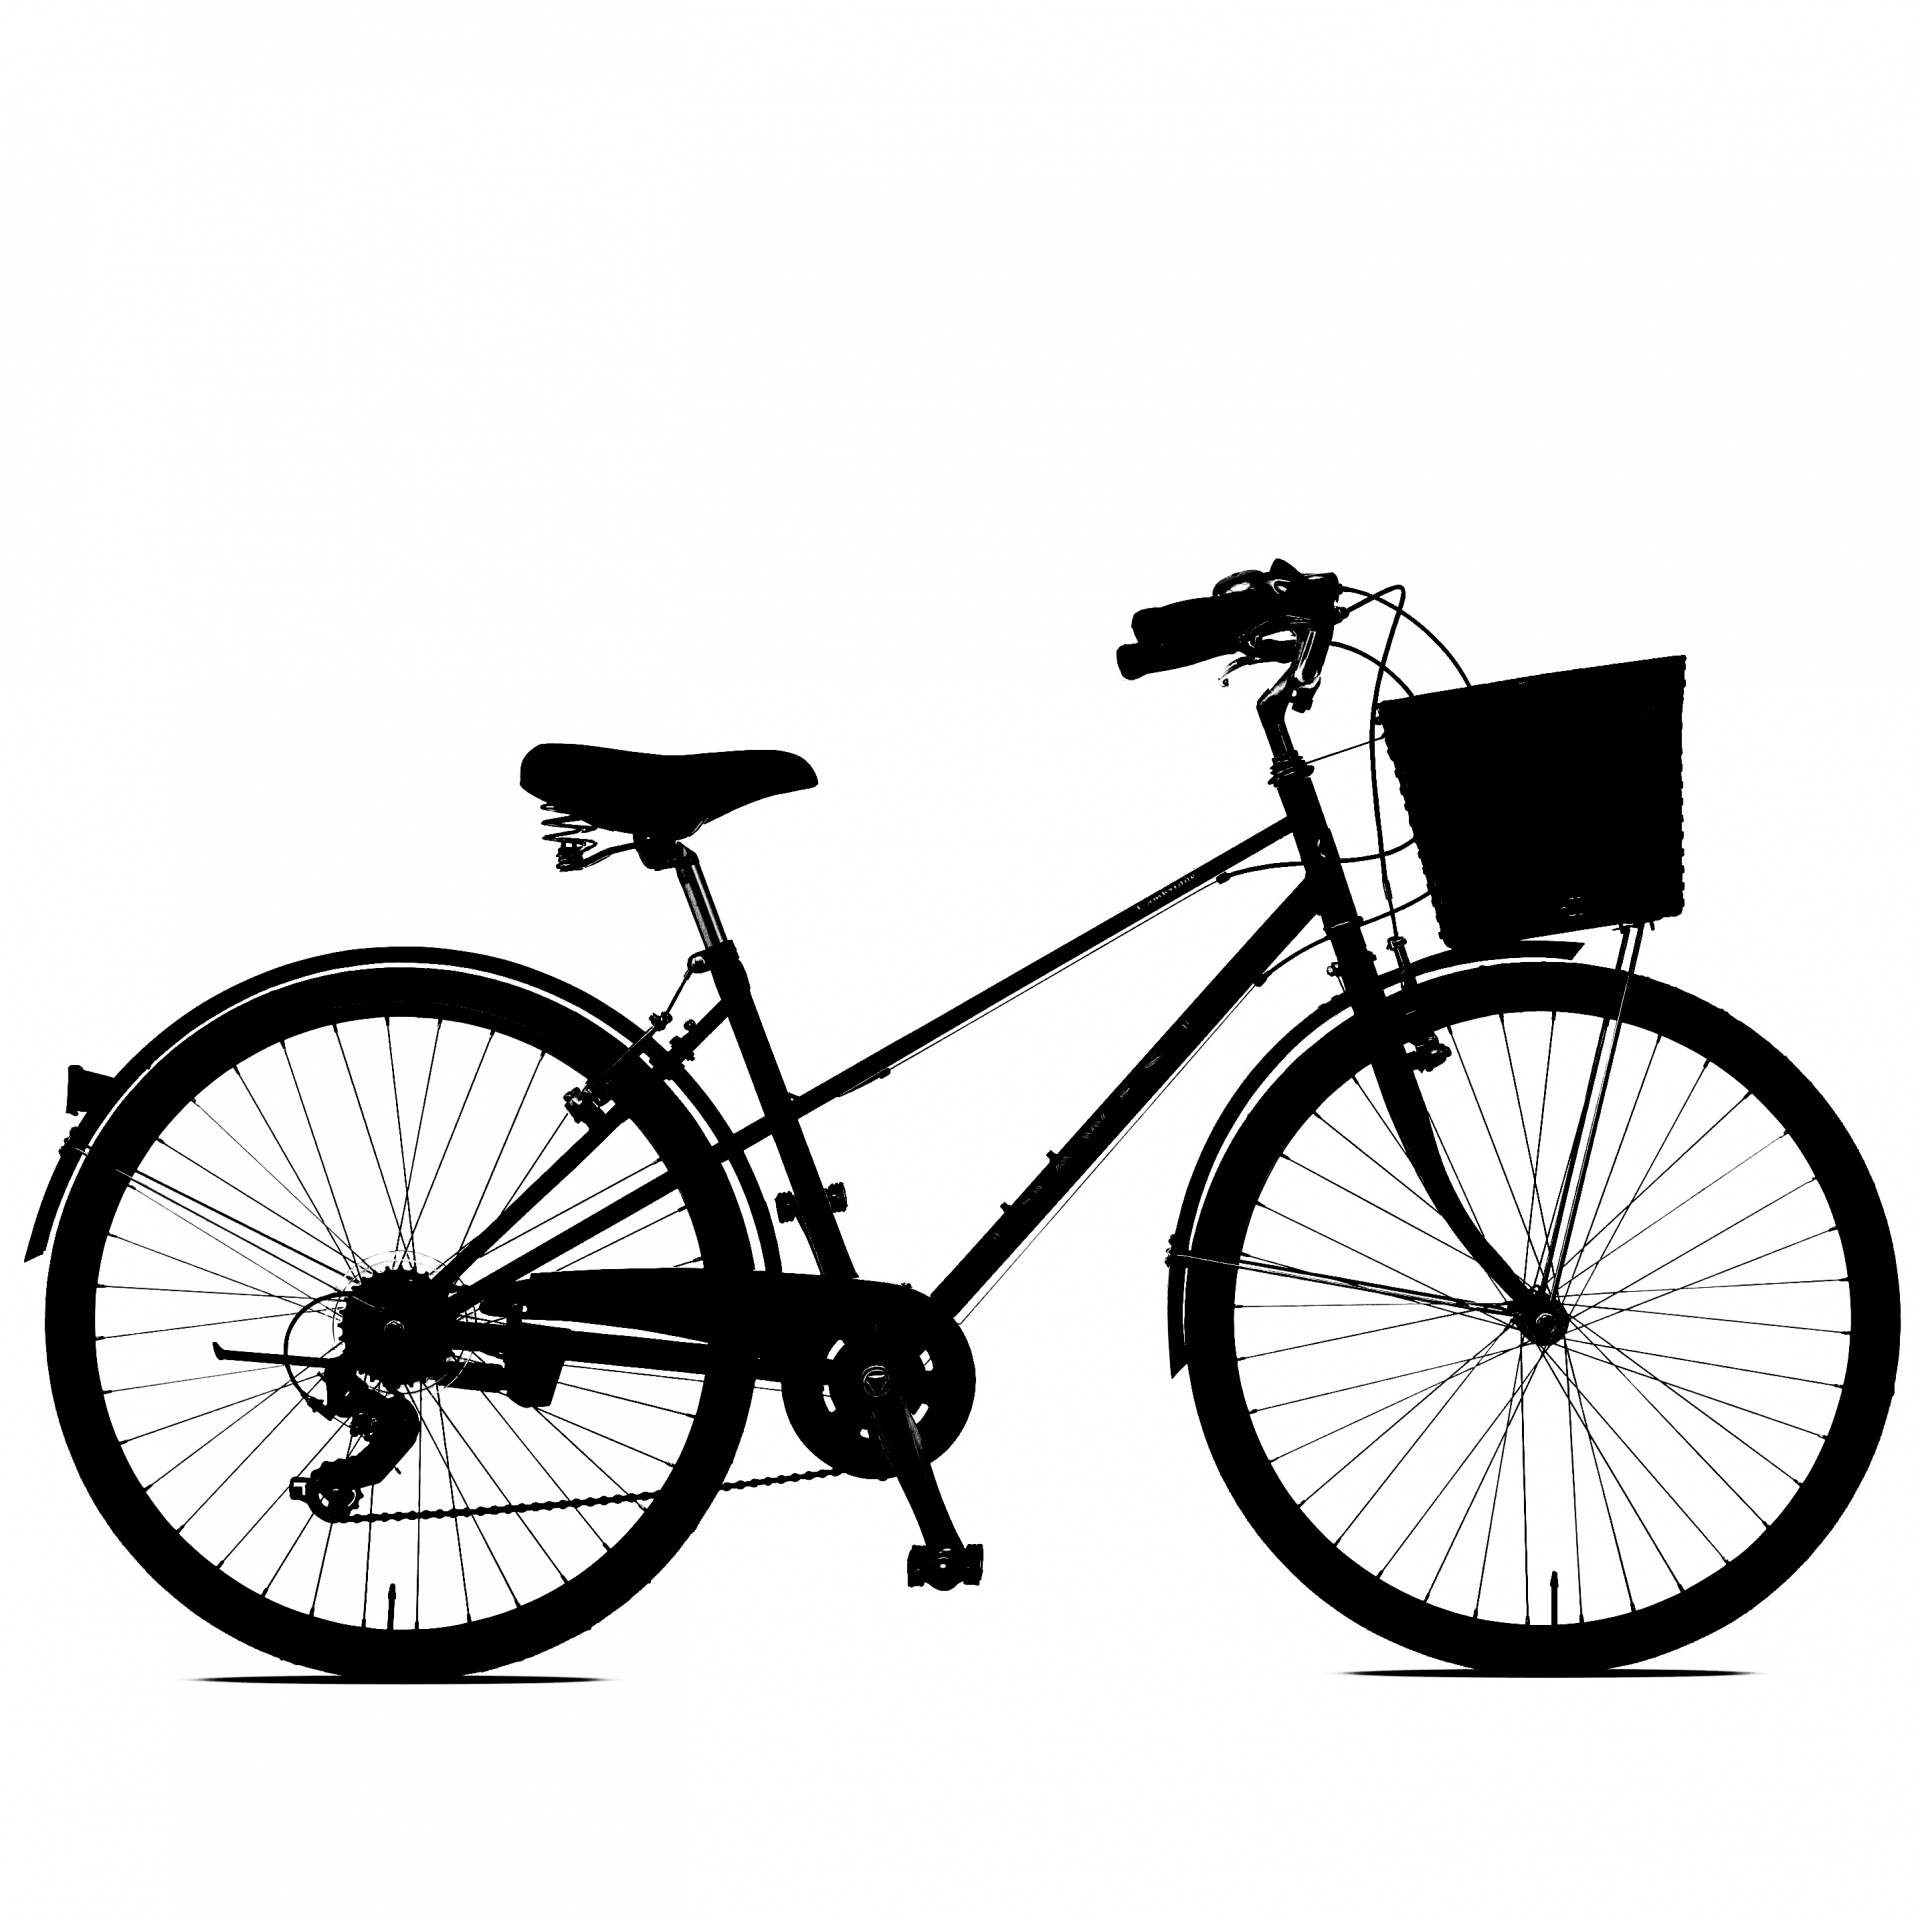 Bicycle,bike,vintage,old fashioned,basket